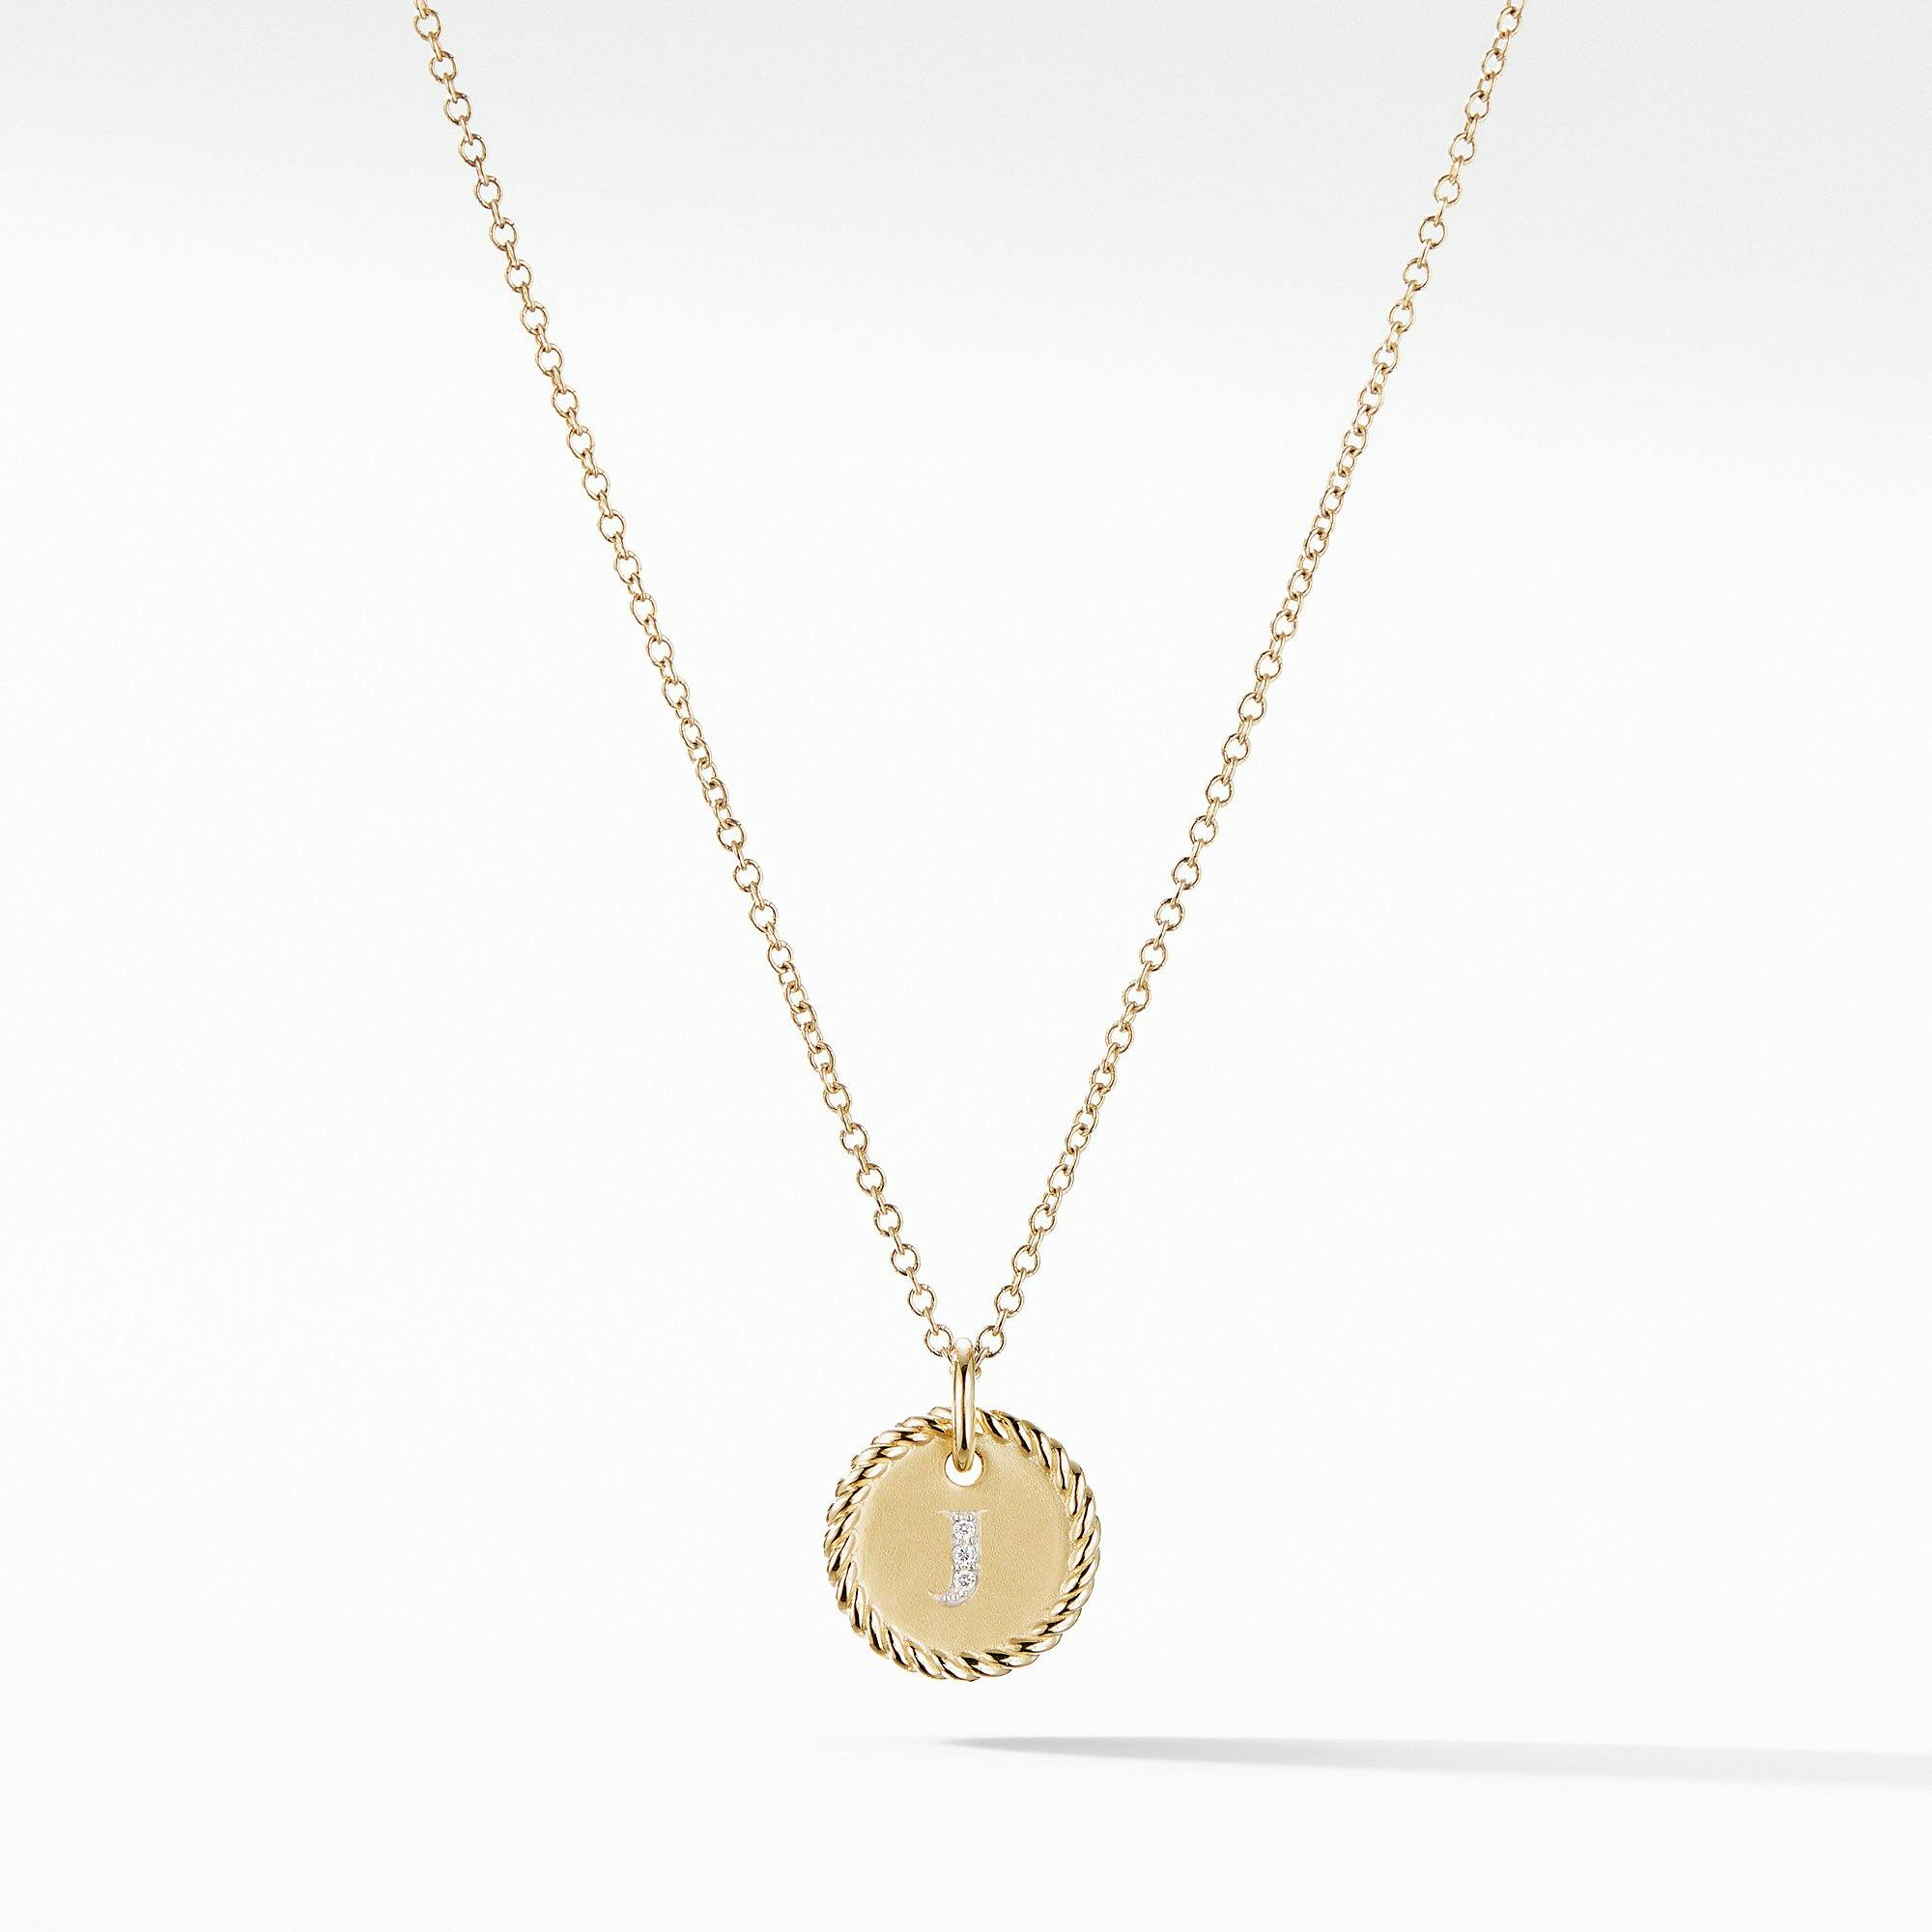 David Yurman "J" Initial Charm Necklace in 18k Yellow Gold with Diamonds